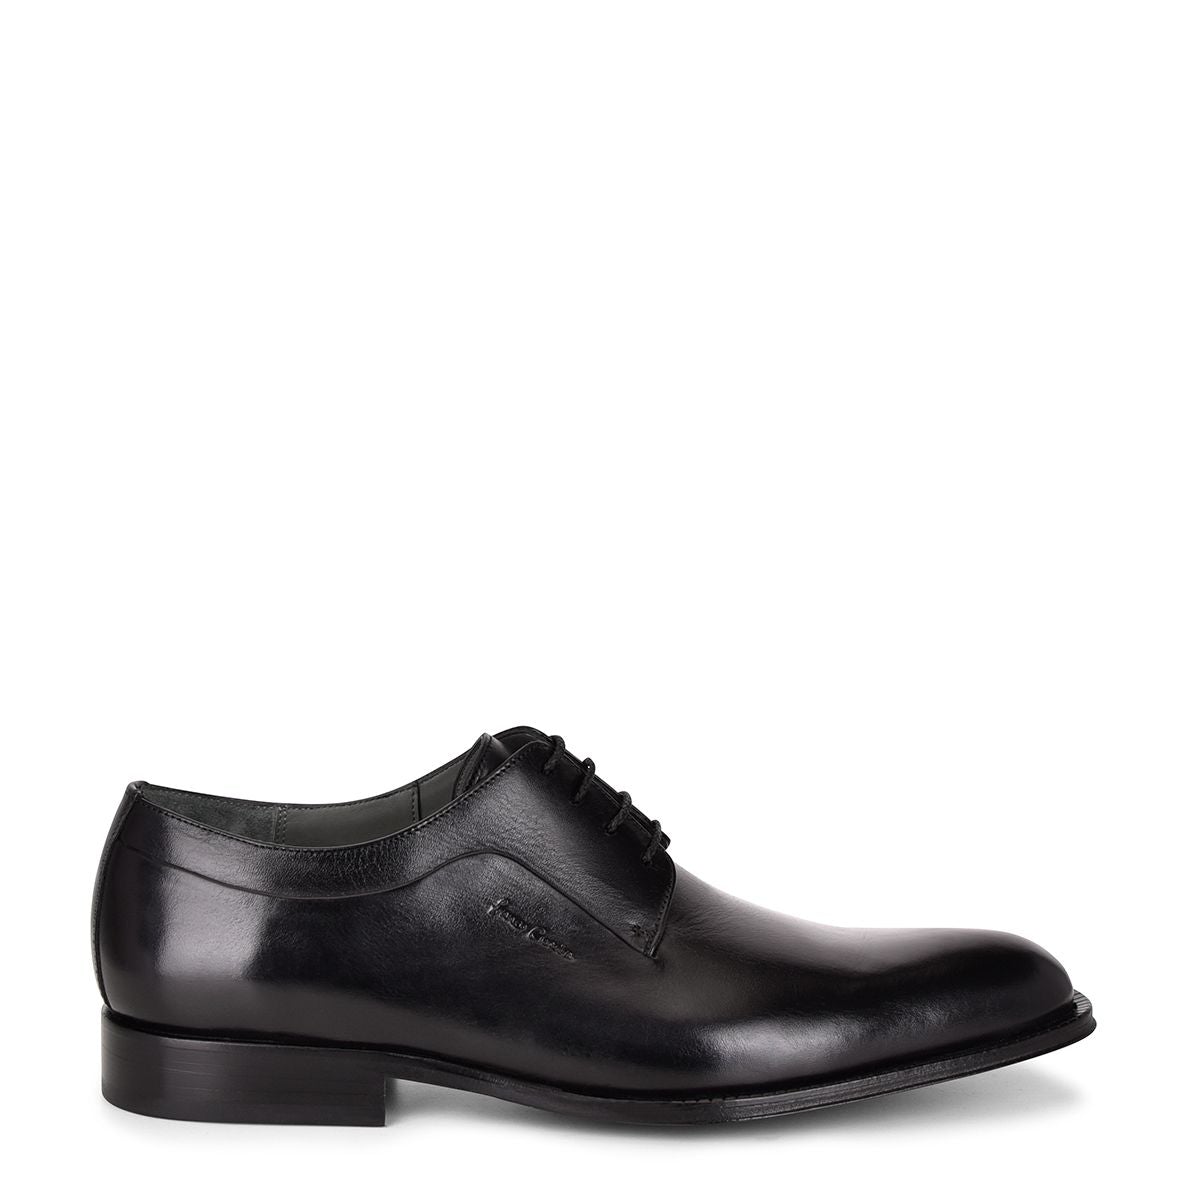 62FBSBS - Cuadra black classic dress leather plain derby shoes for men-Kuet.us